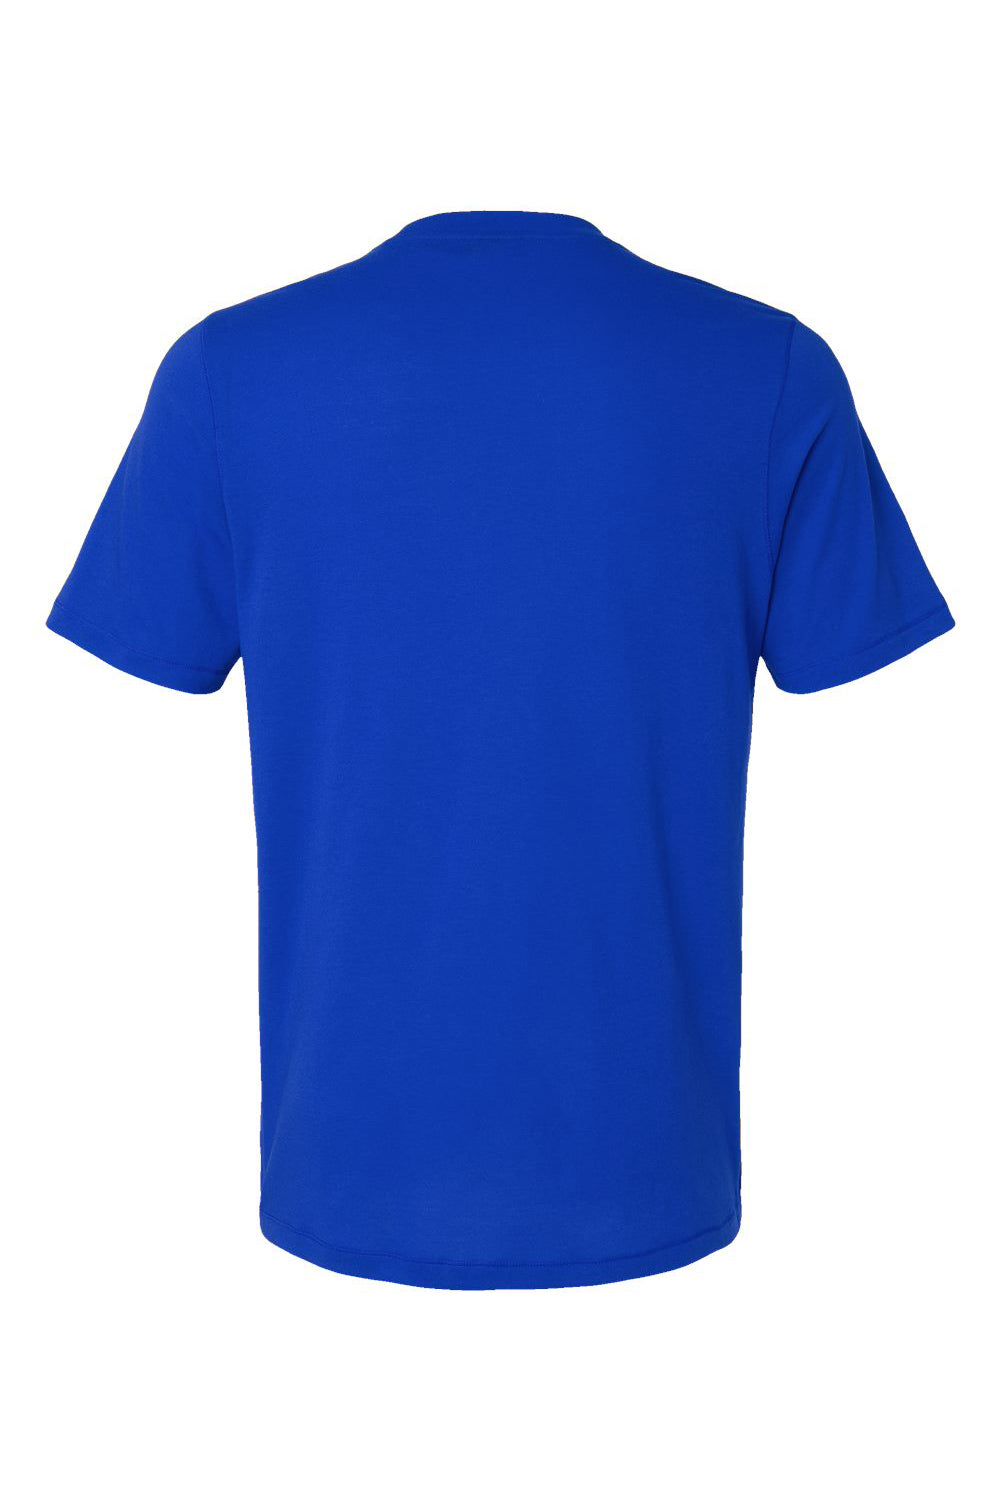 Adidas A556 Mens Short Sleeve Crewneck T-Shirt Collegiate Royal Blue Flat Back